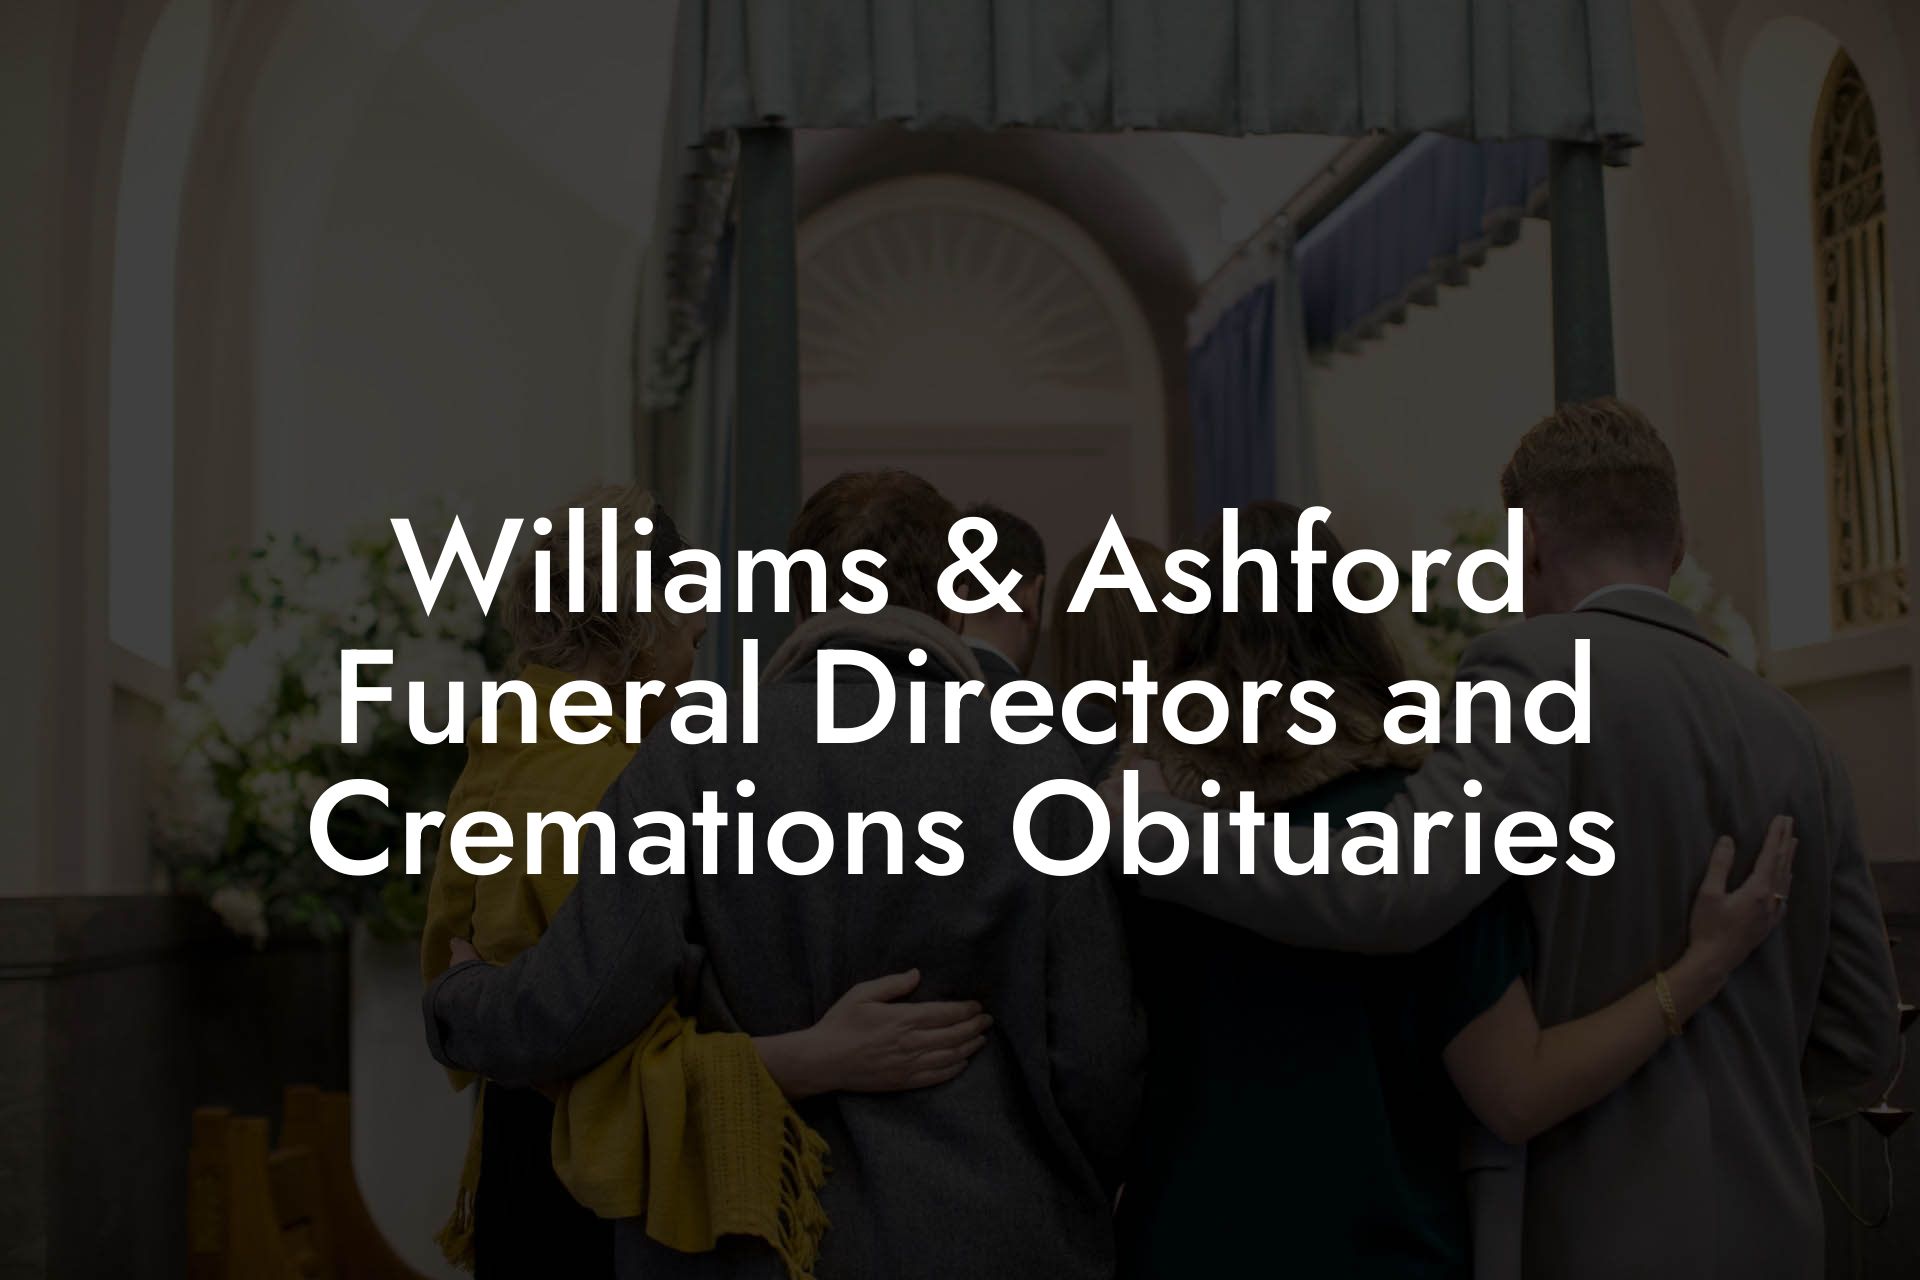 Williams & Ashford Funeral Directors and Cremations Obituaries